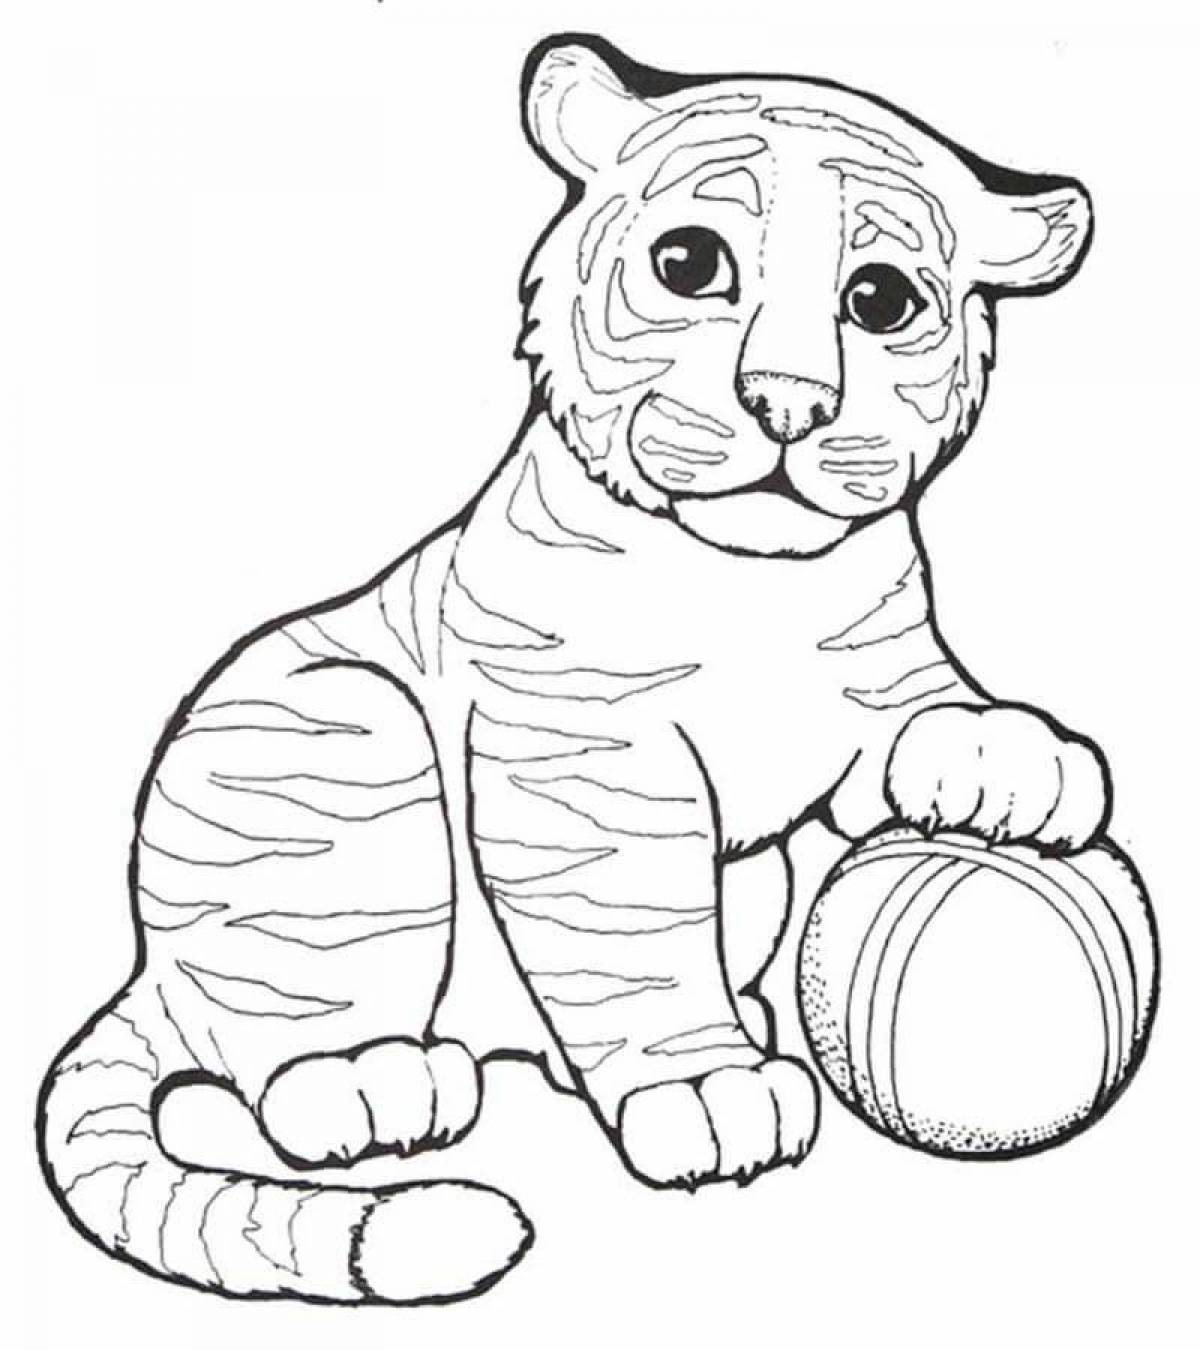 Милая страница раскраски тигренка